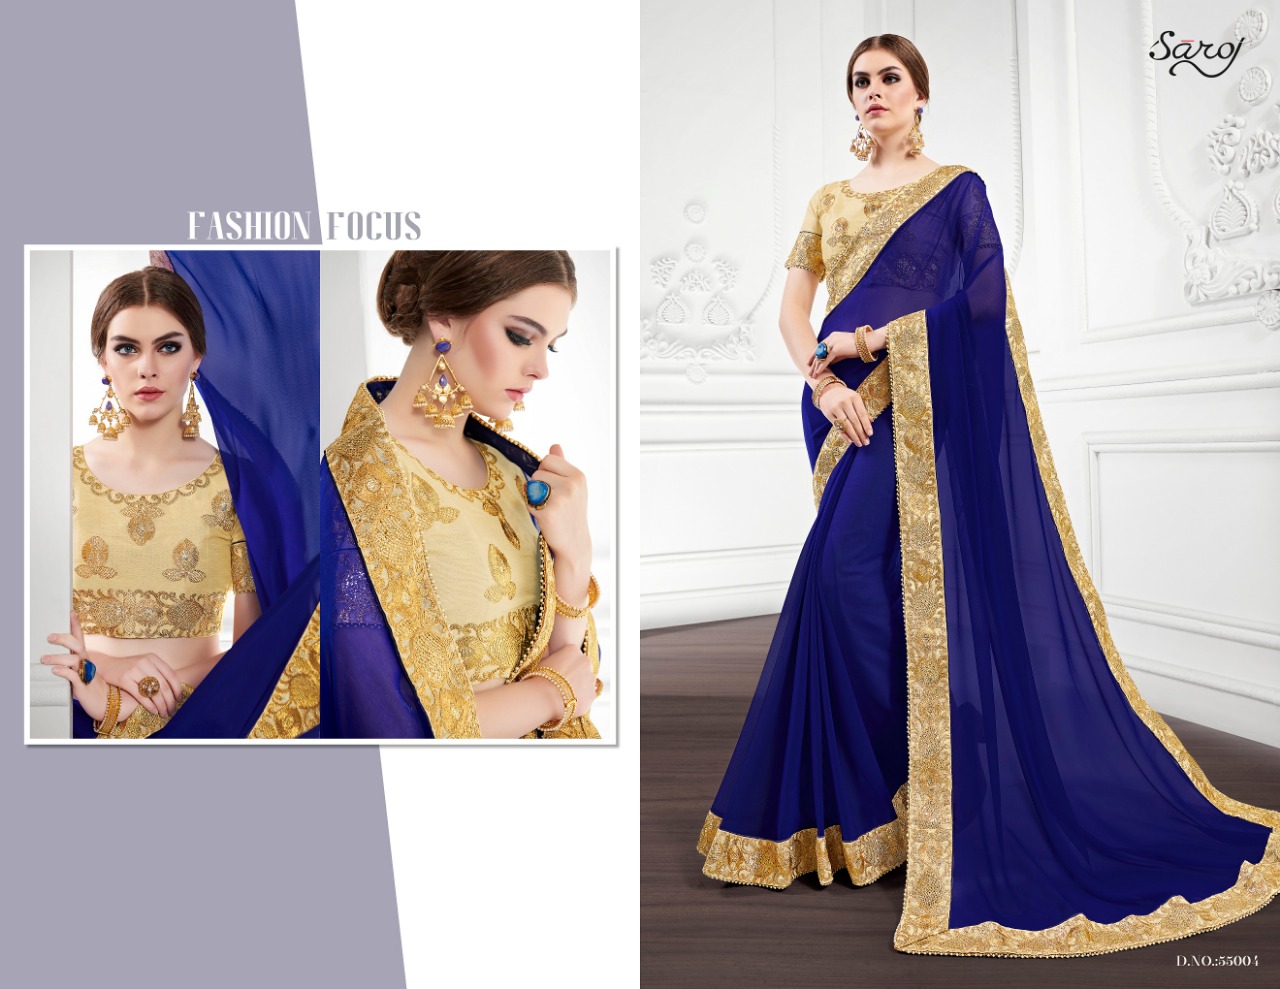 Saroj Saree Indian Fashion 55004